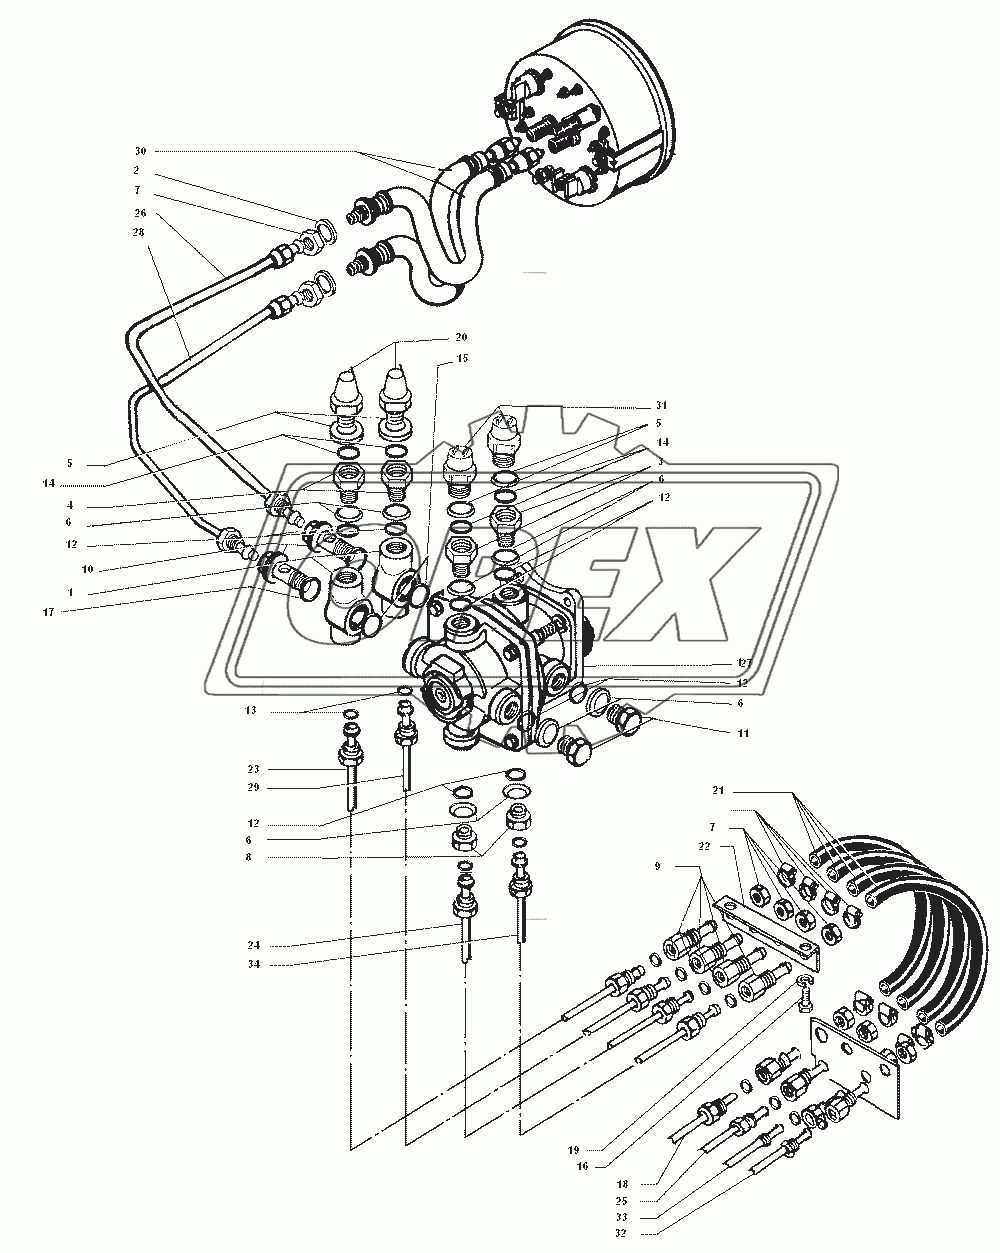 Установка тормозного крана и трубок воздушного манометра